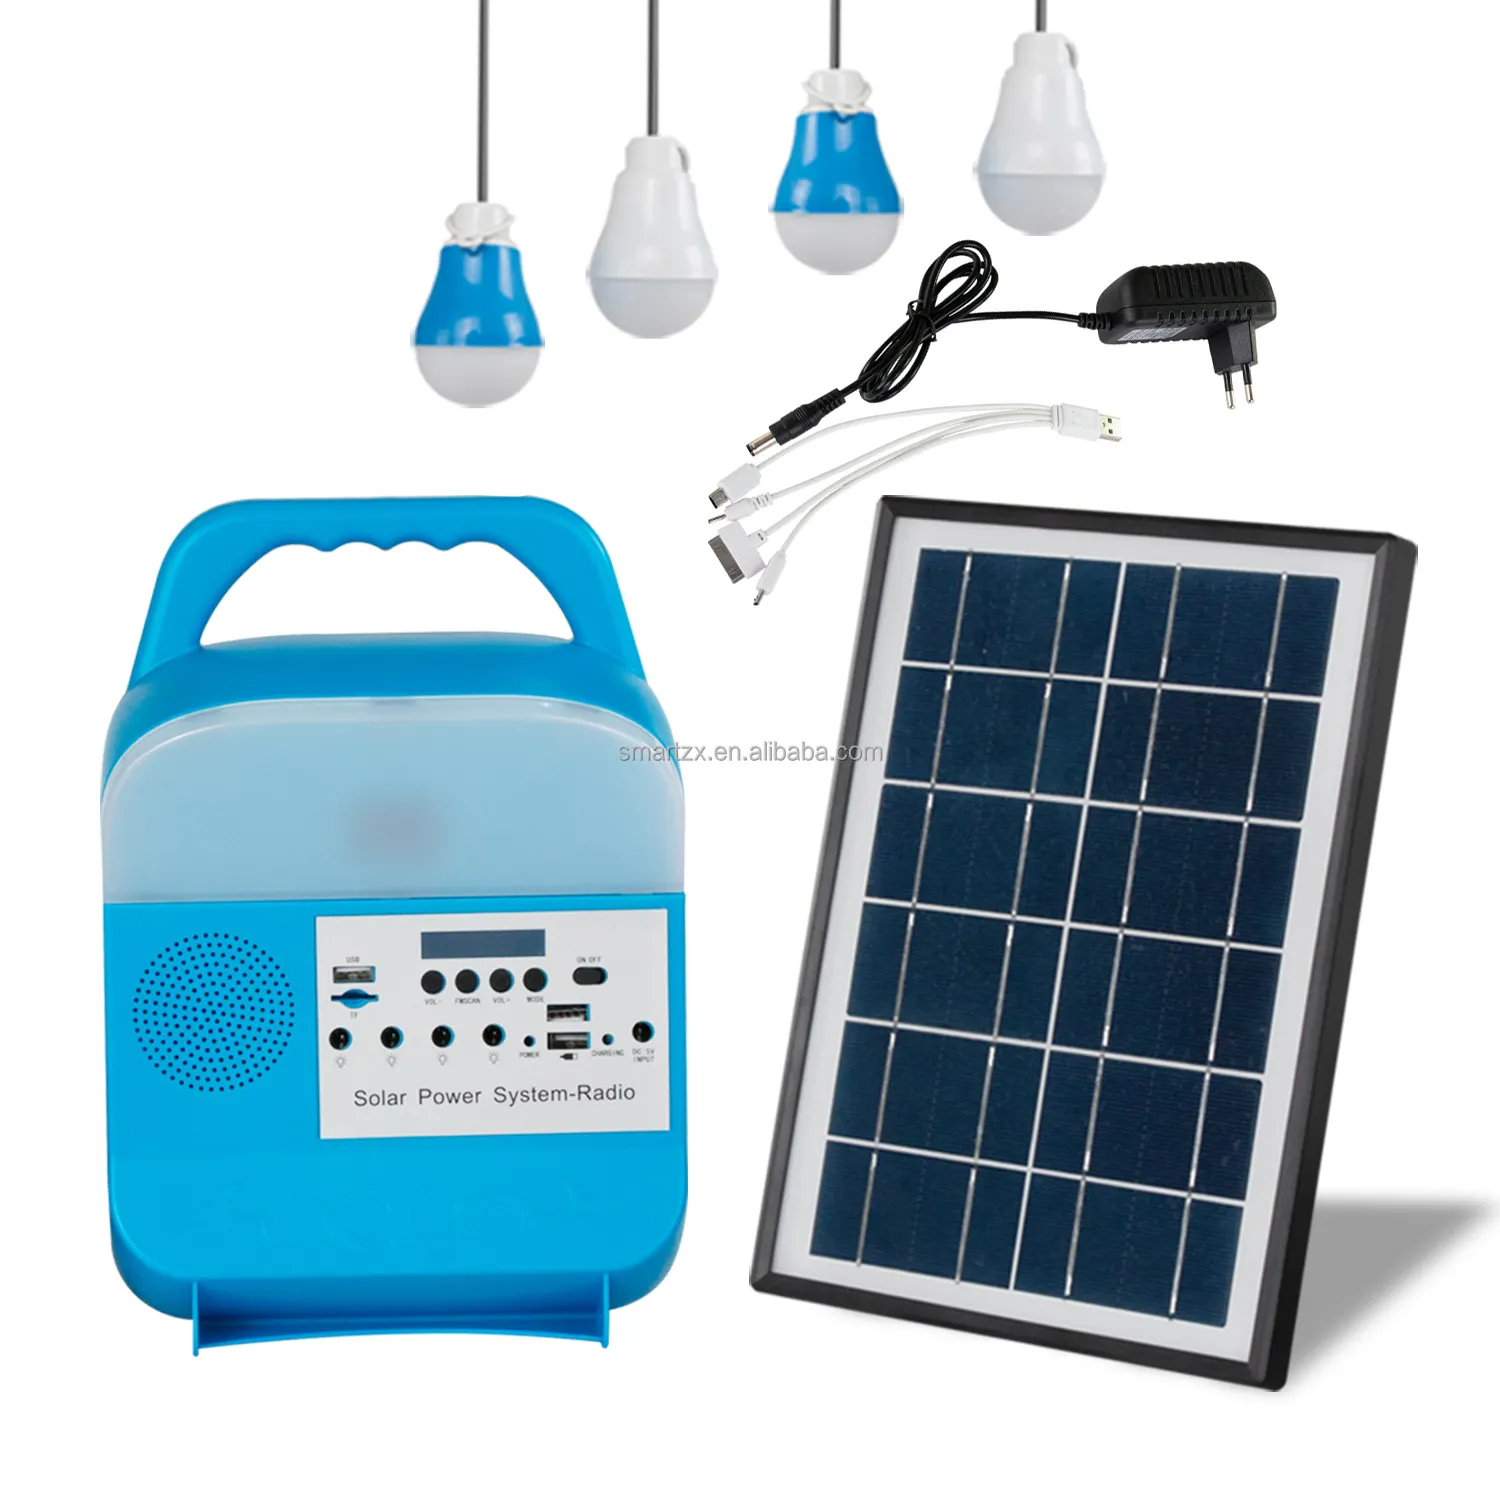 Solar beleuchtungs system Solarstrom anlage Solar LED Kit Solar Home System Mini Solaranlage tragbare netz unabhängige Beleuchtung Solar